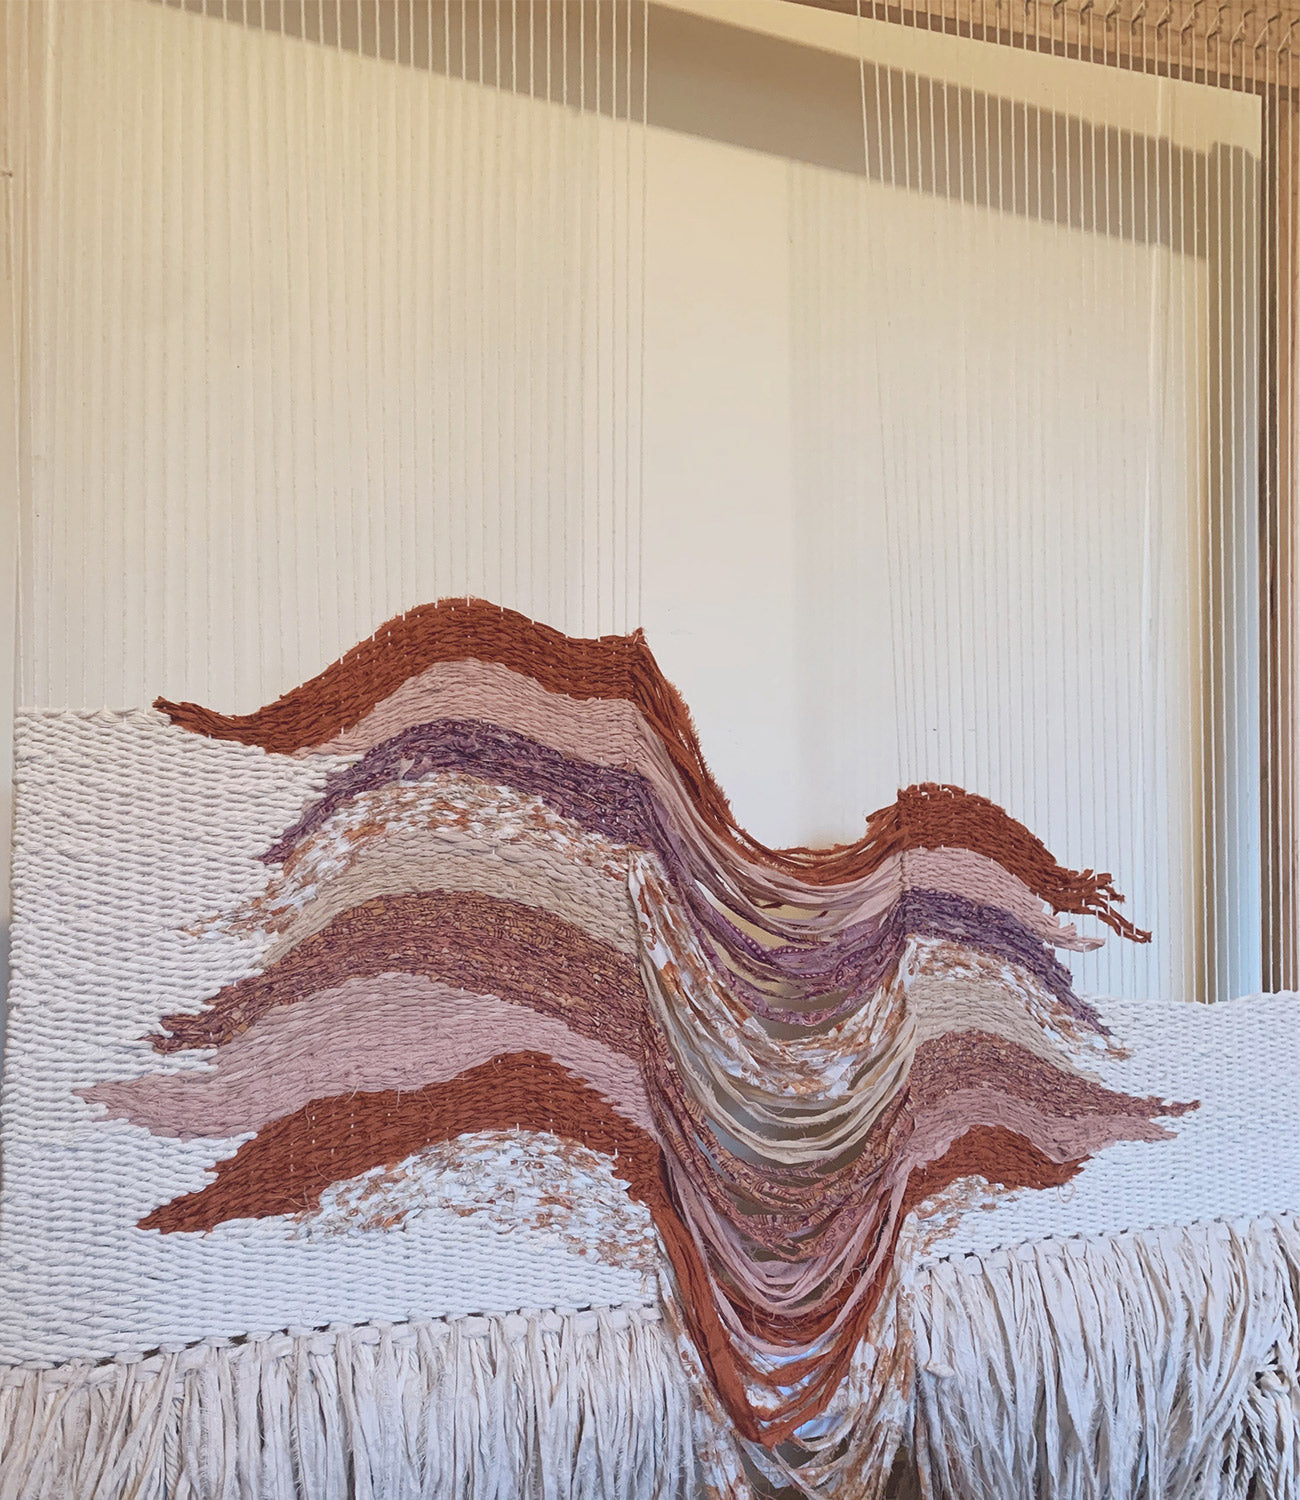 Lana Scoville Revive loom Wall Hanging in progress for Arnhem Byron Bay